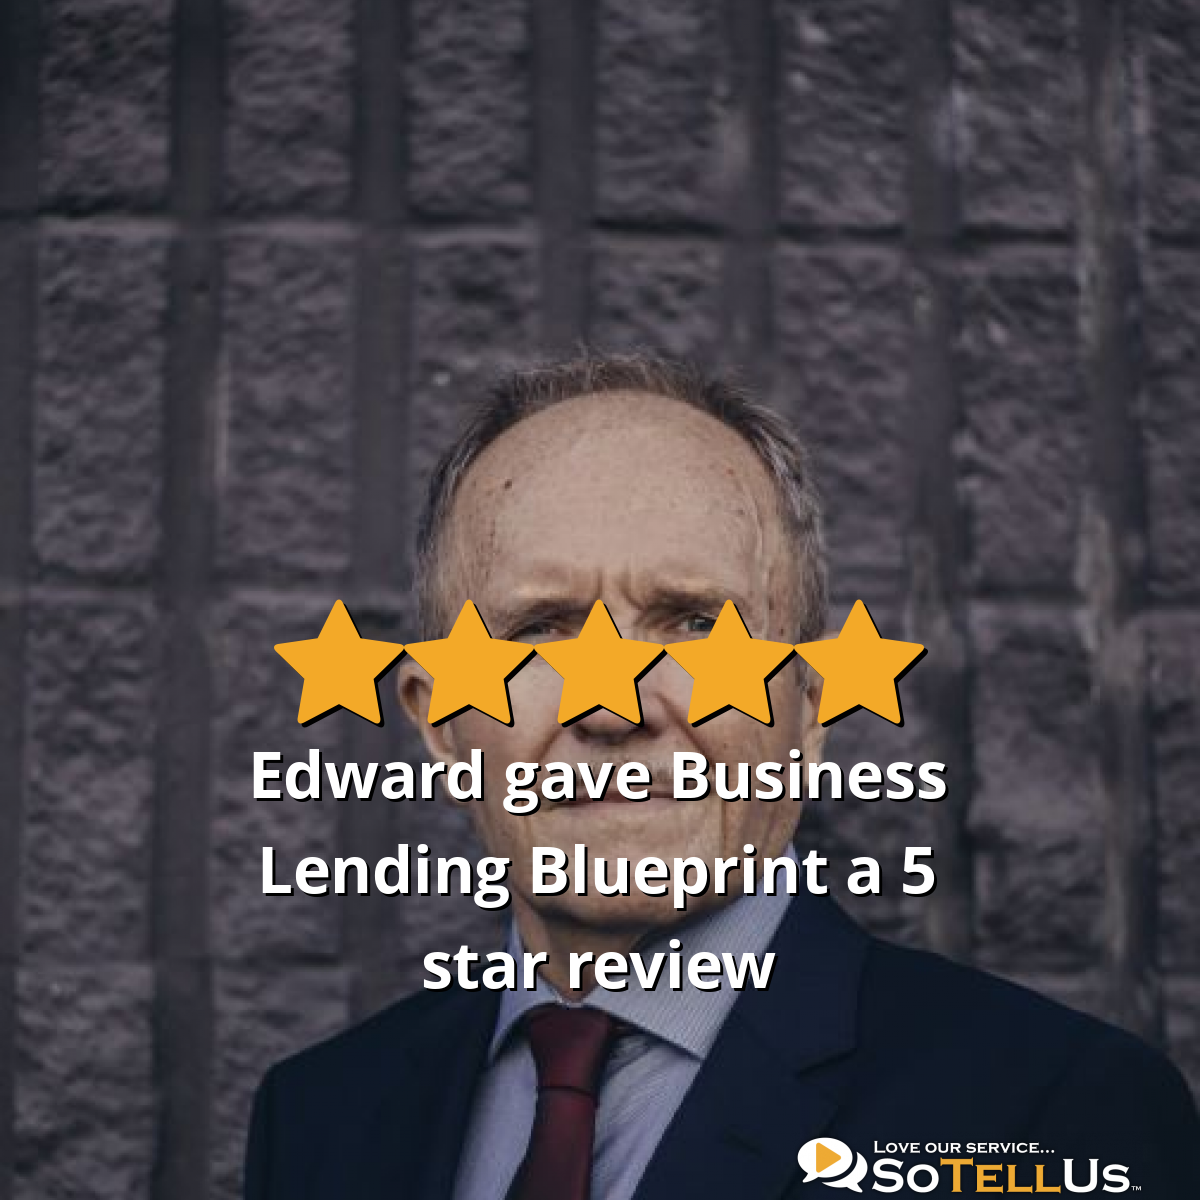 business lending blueprint free download